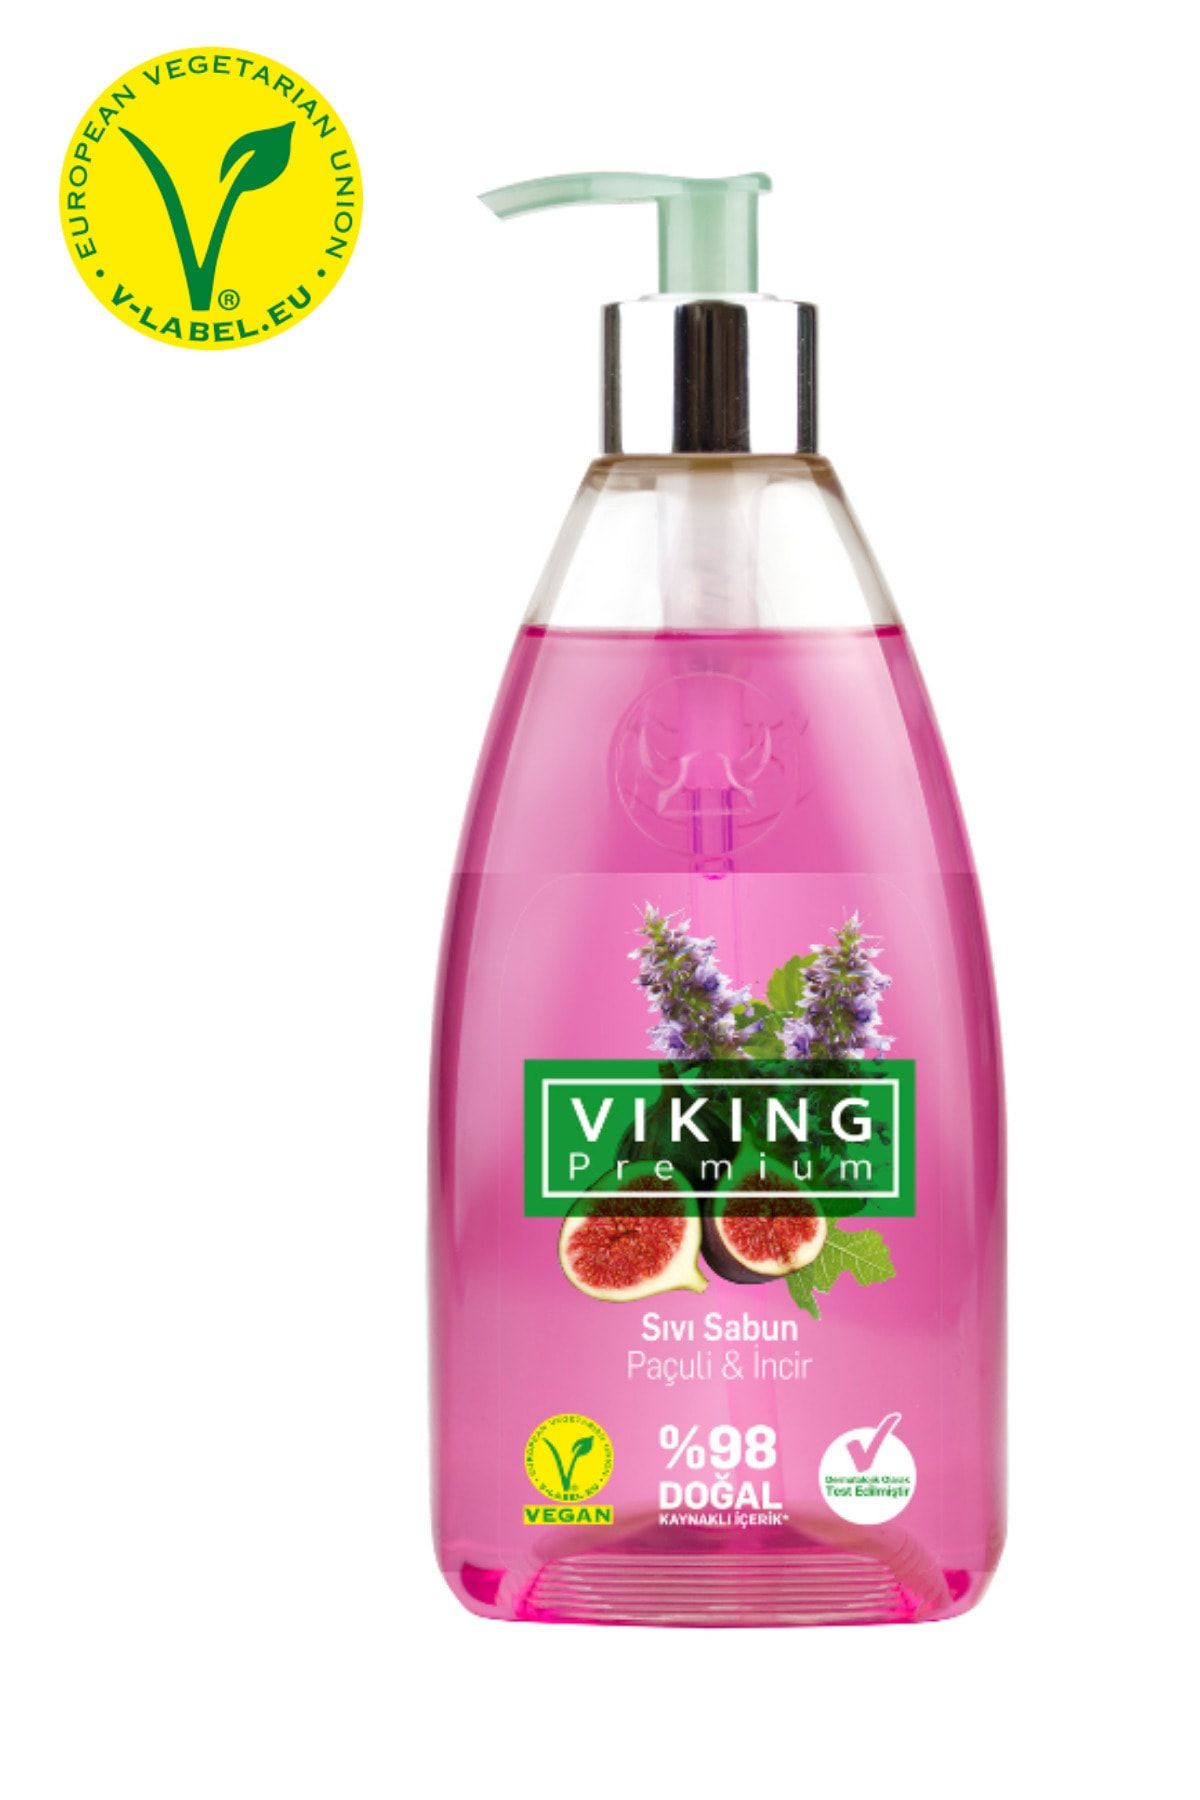 Viking Premium Vegan Sıvı Sabun Paçuli & Incir 500ml